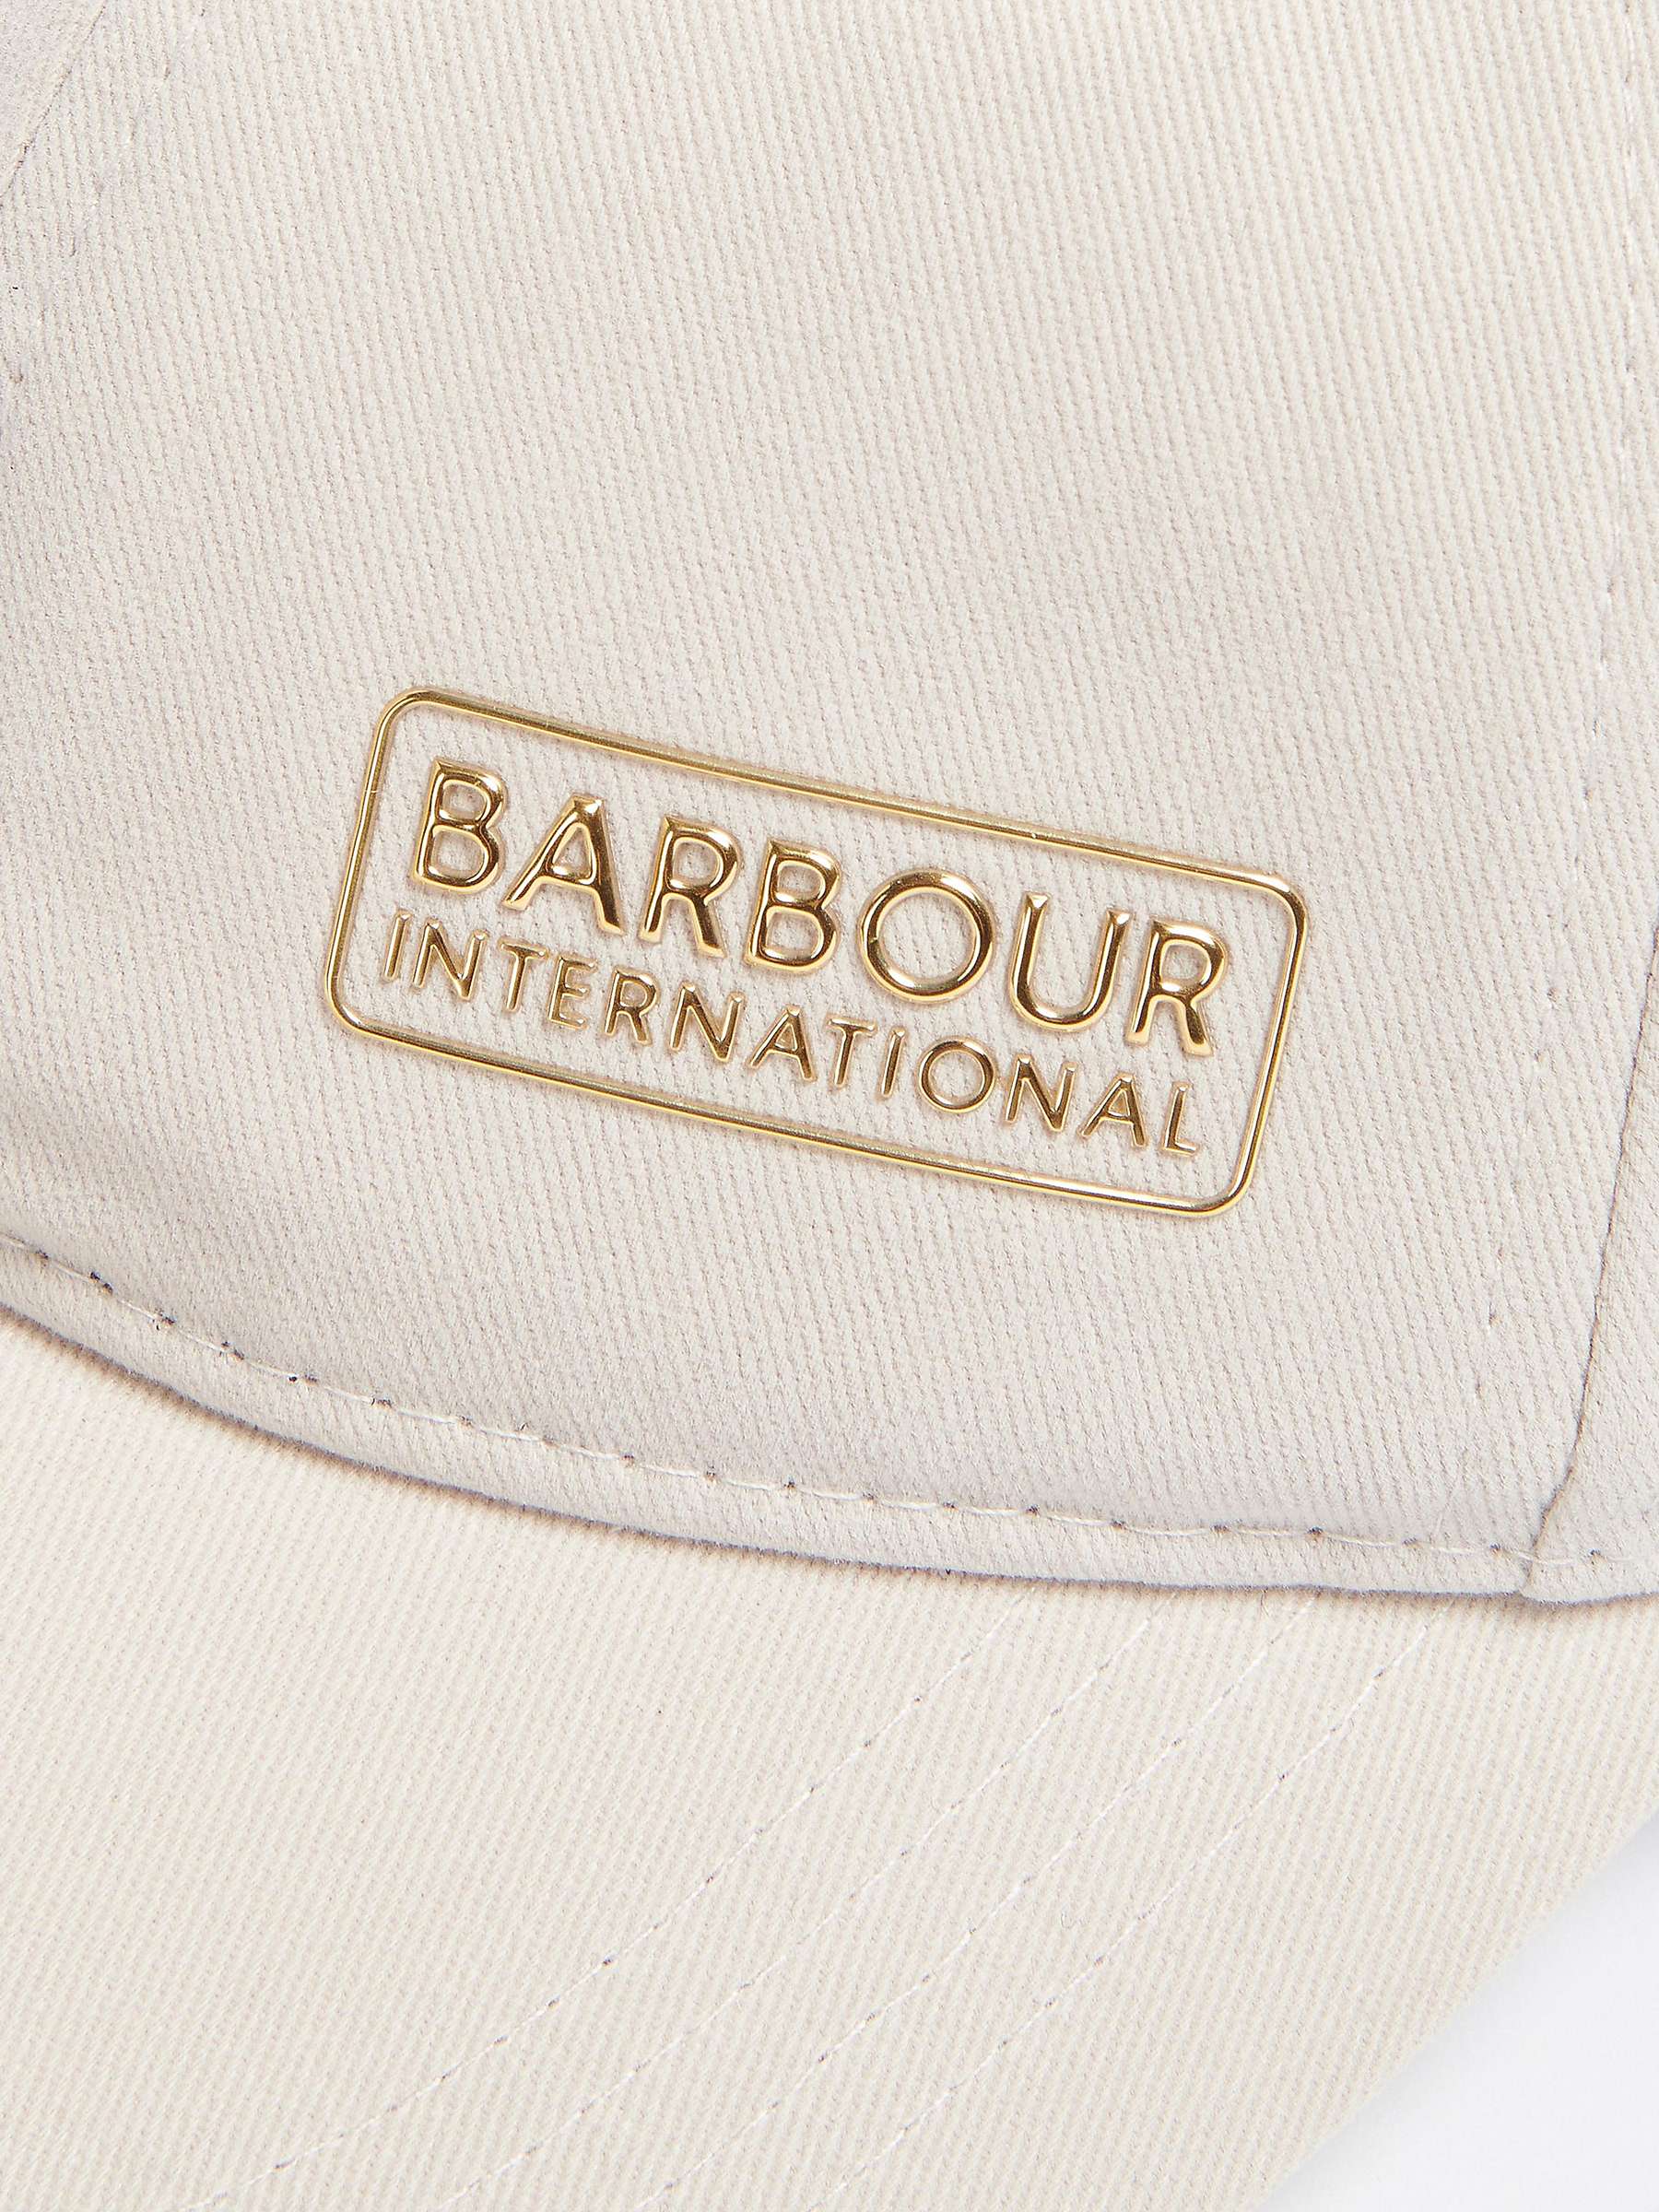 Buy Barbour International Norton Sports Baseball Cap Online at johnlewis.com